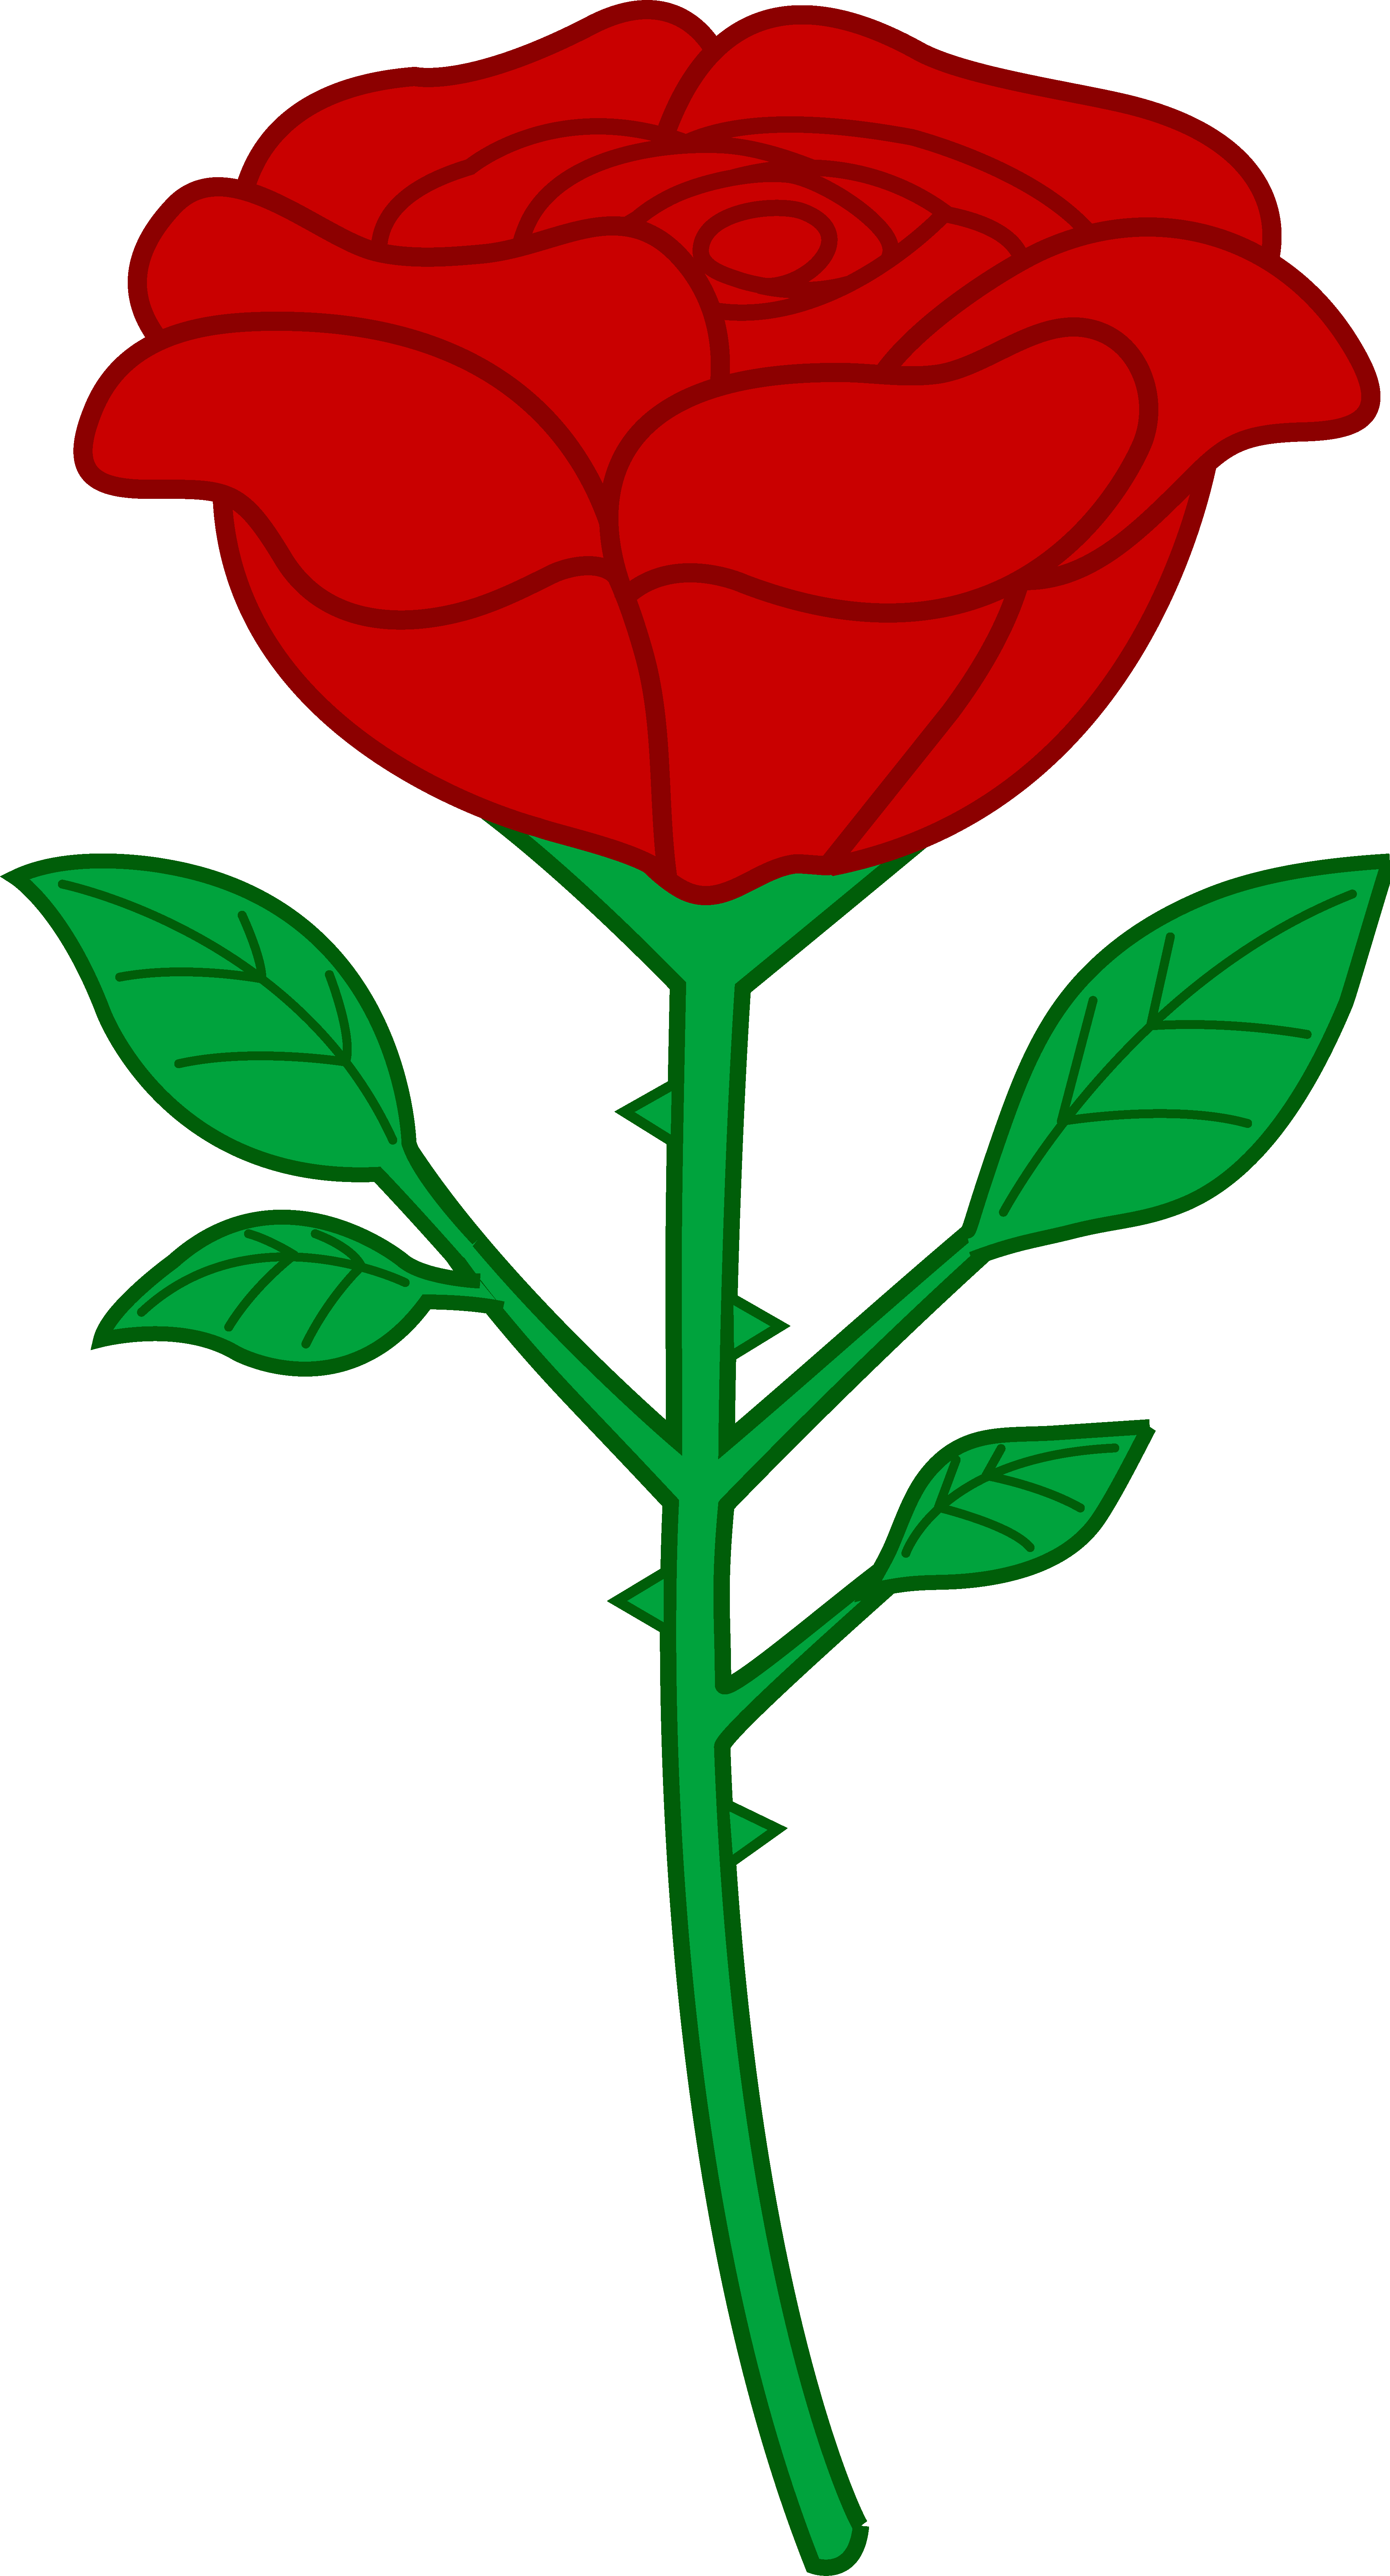 clipart rose - Rose Images Clip Art